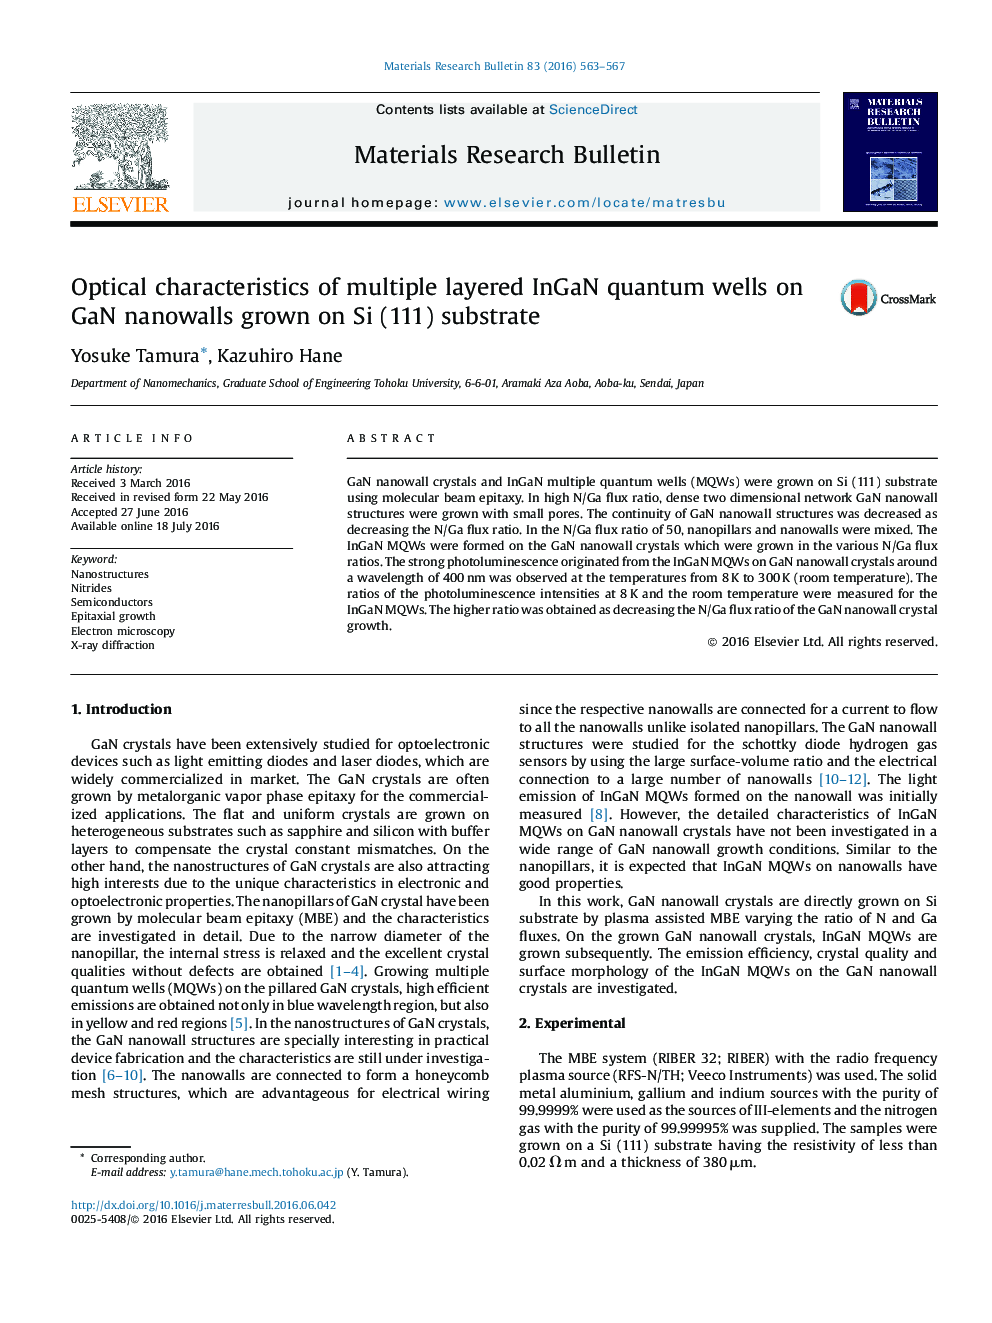 Optical characteristics of multiple layered InGaN quantum wells on GaN nanowalls grown on Si (111) substrate